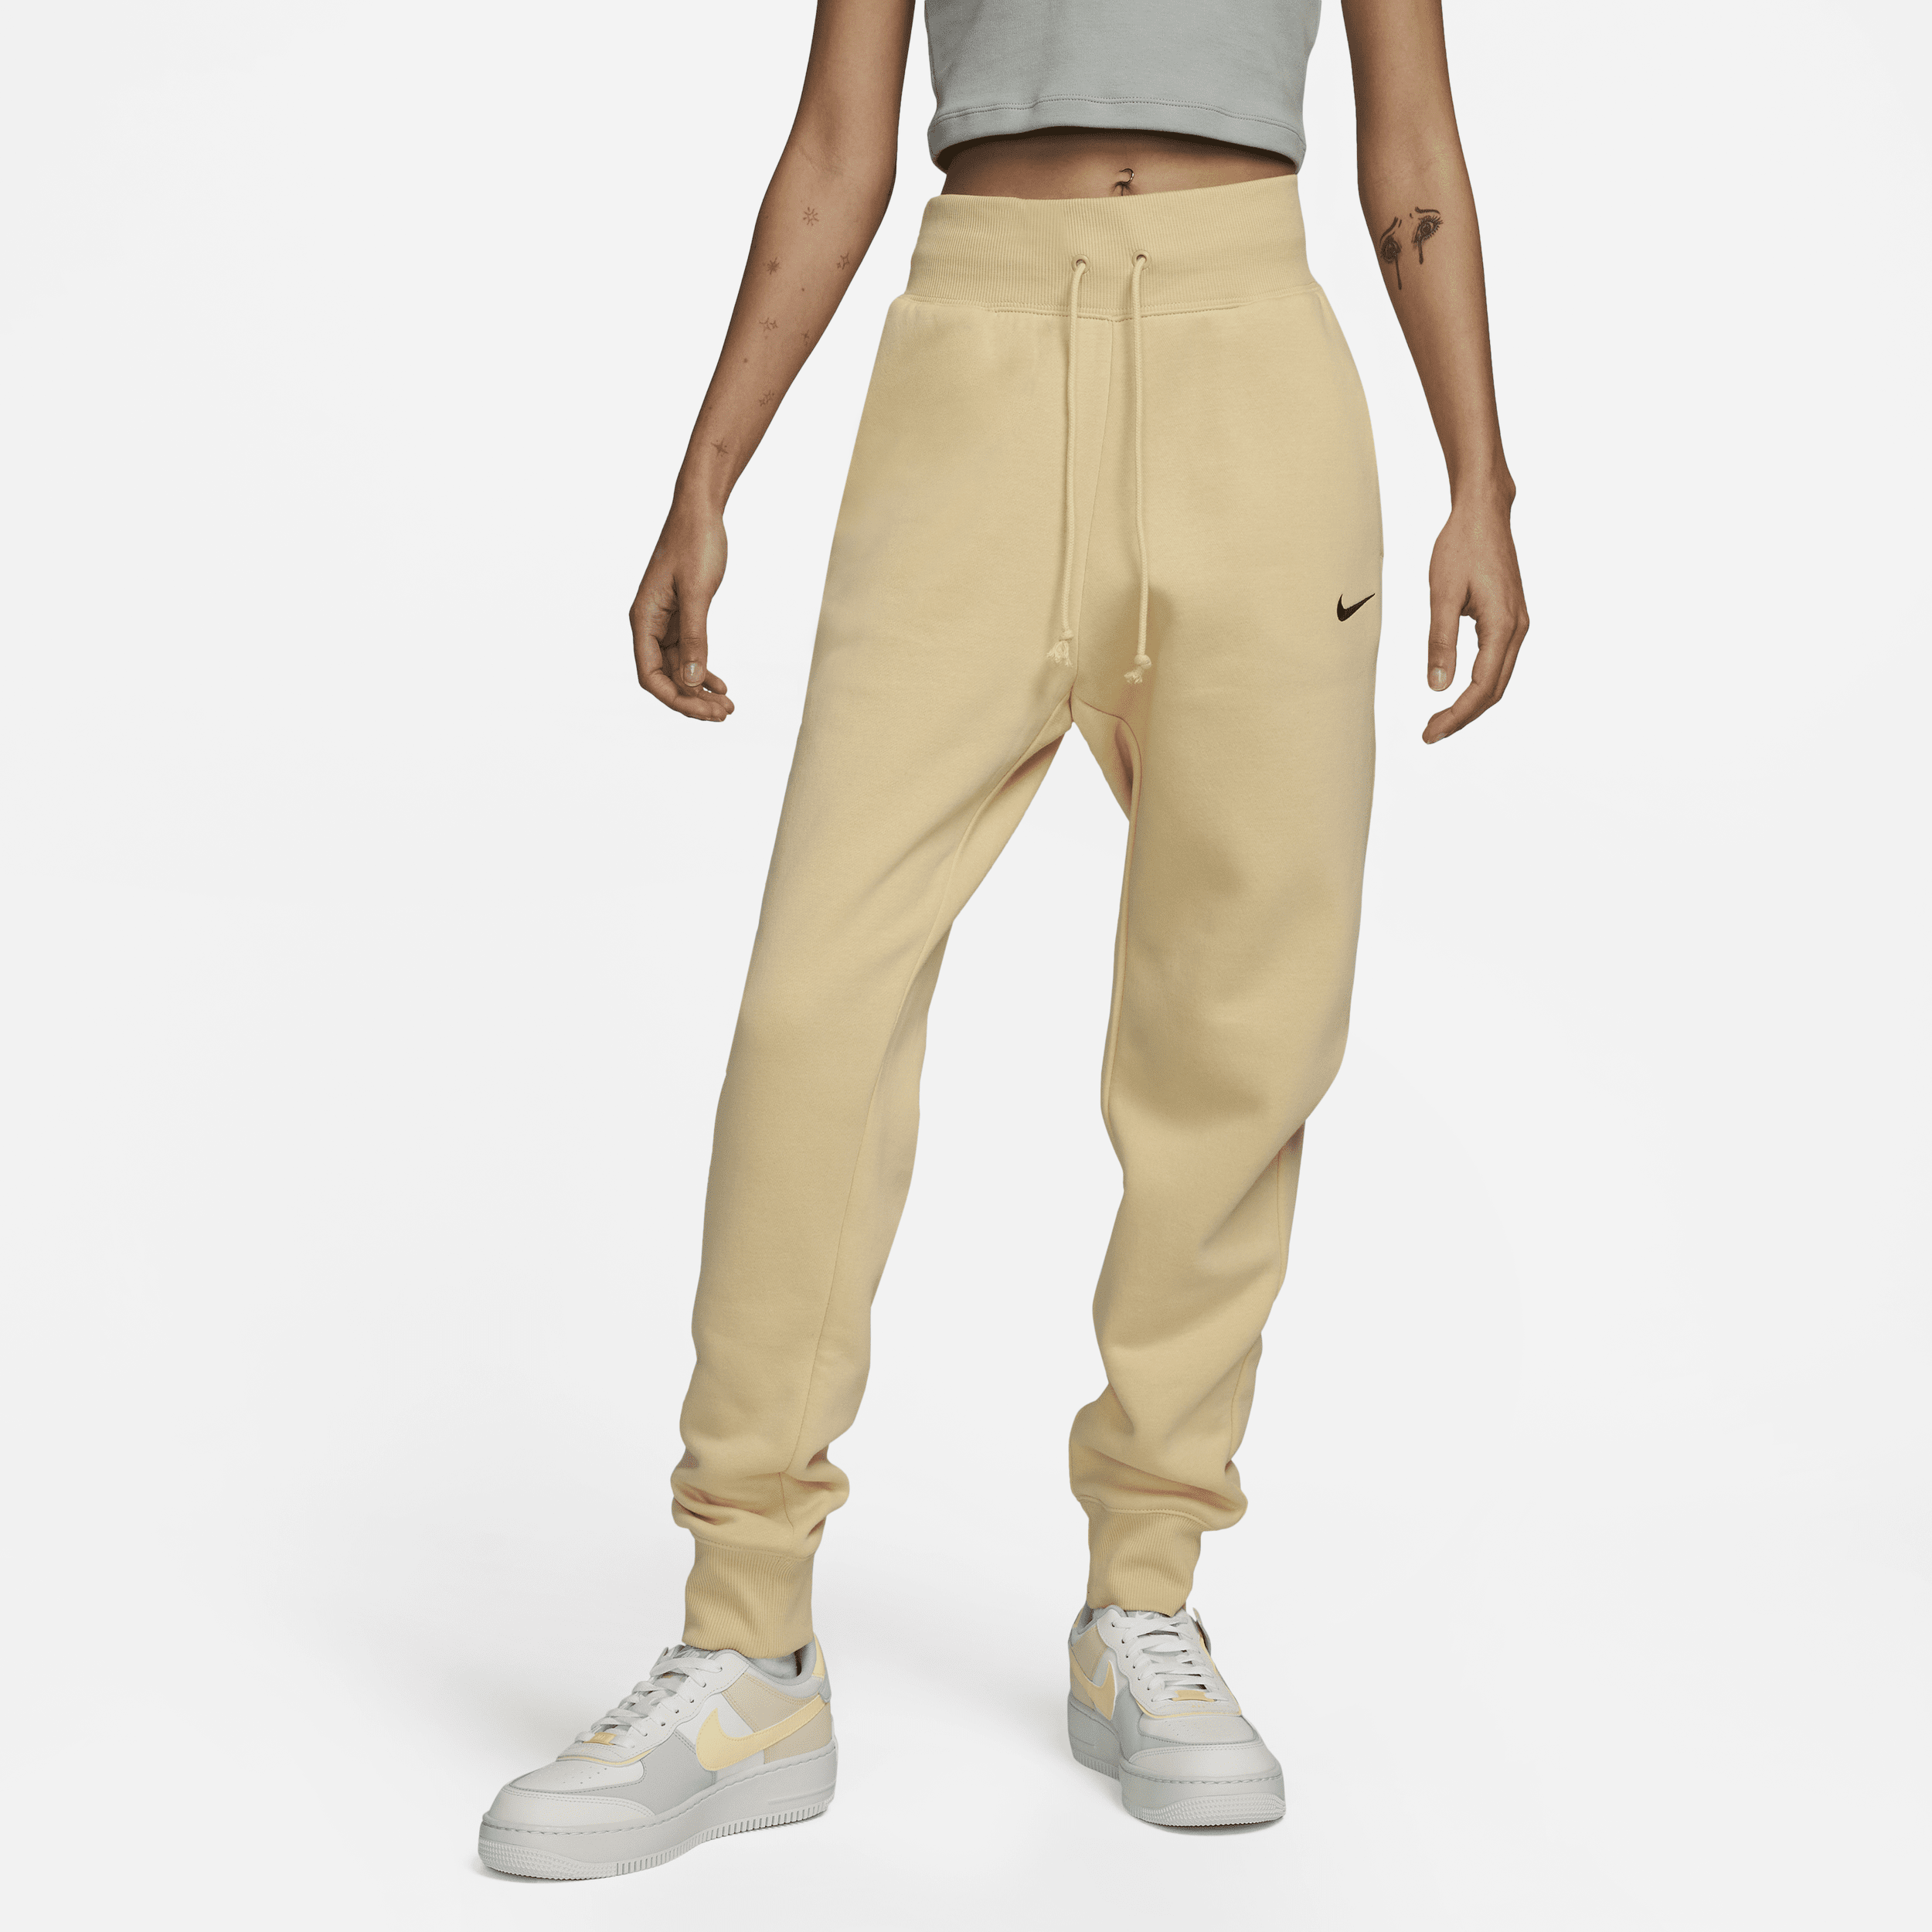 Nike Sportswear Phoenix Fleece-fleecejoggingbukser med høj talje til kvinder - brun